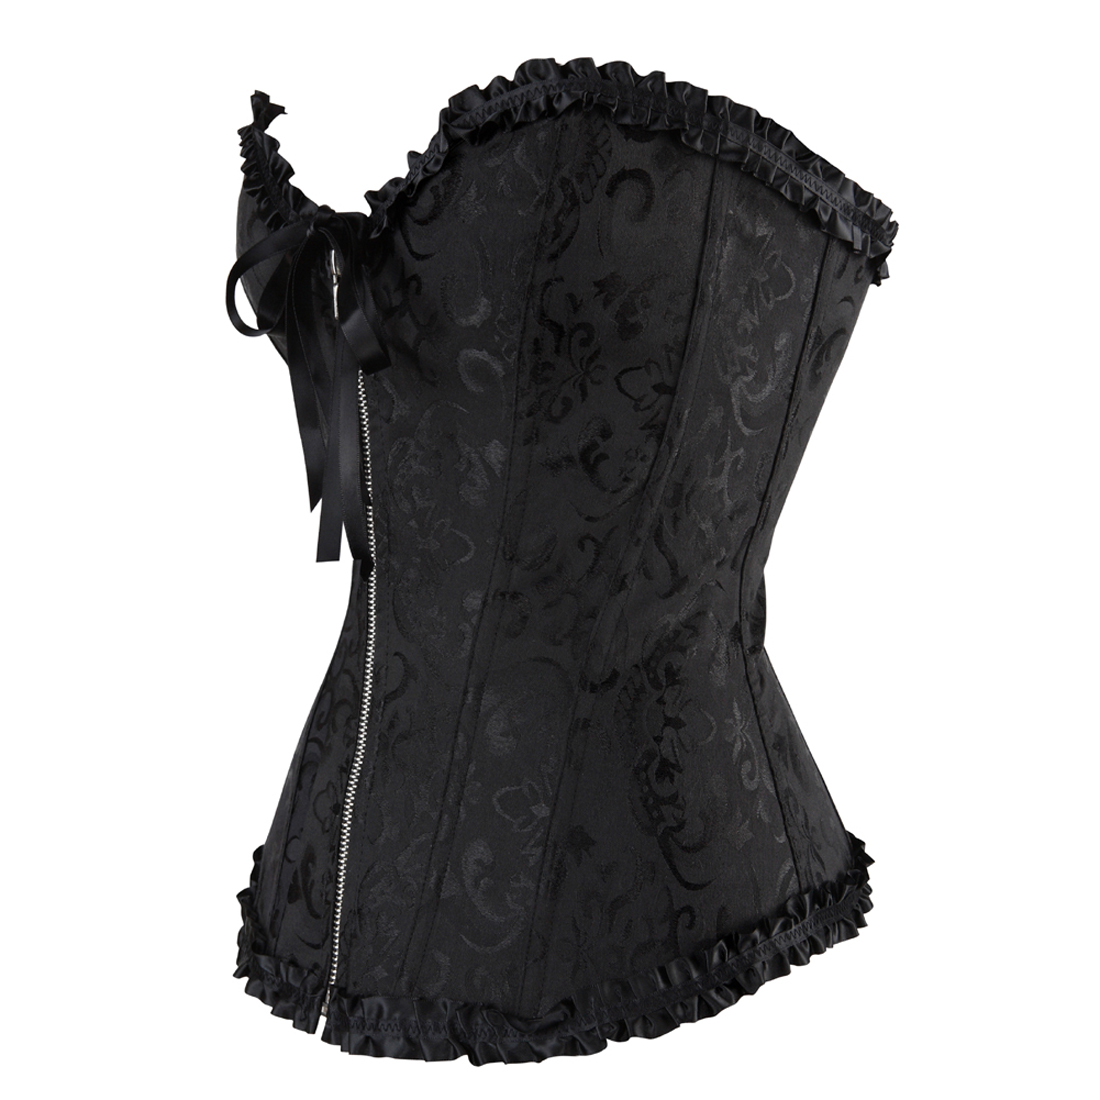 Black-Corsets Burlesque Masquerade Overbust Classic Corsetto Top for Women Plus Size Zip Boned Bustier Halloween Evening Party Costume